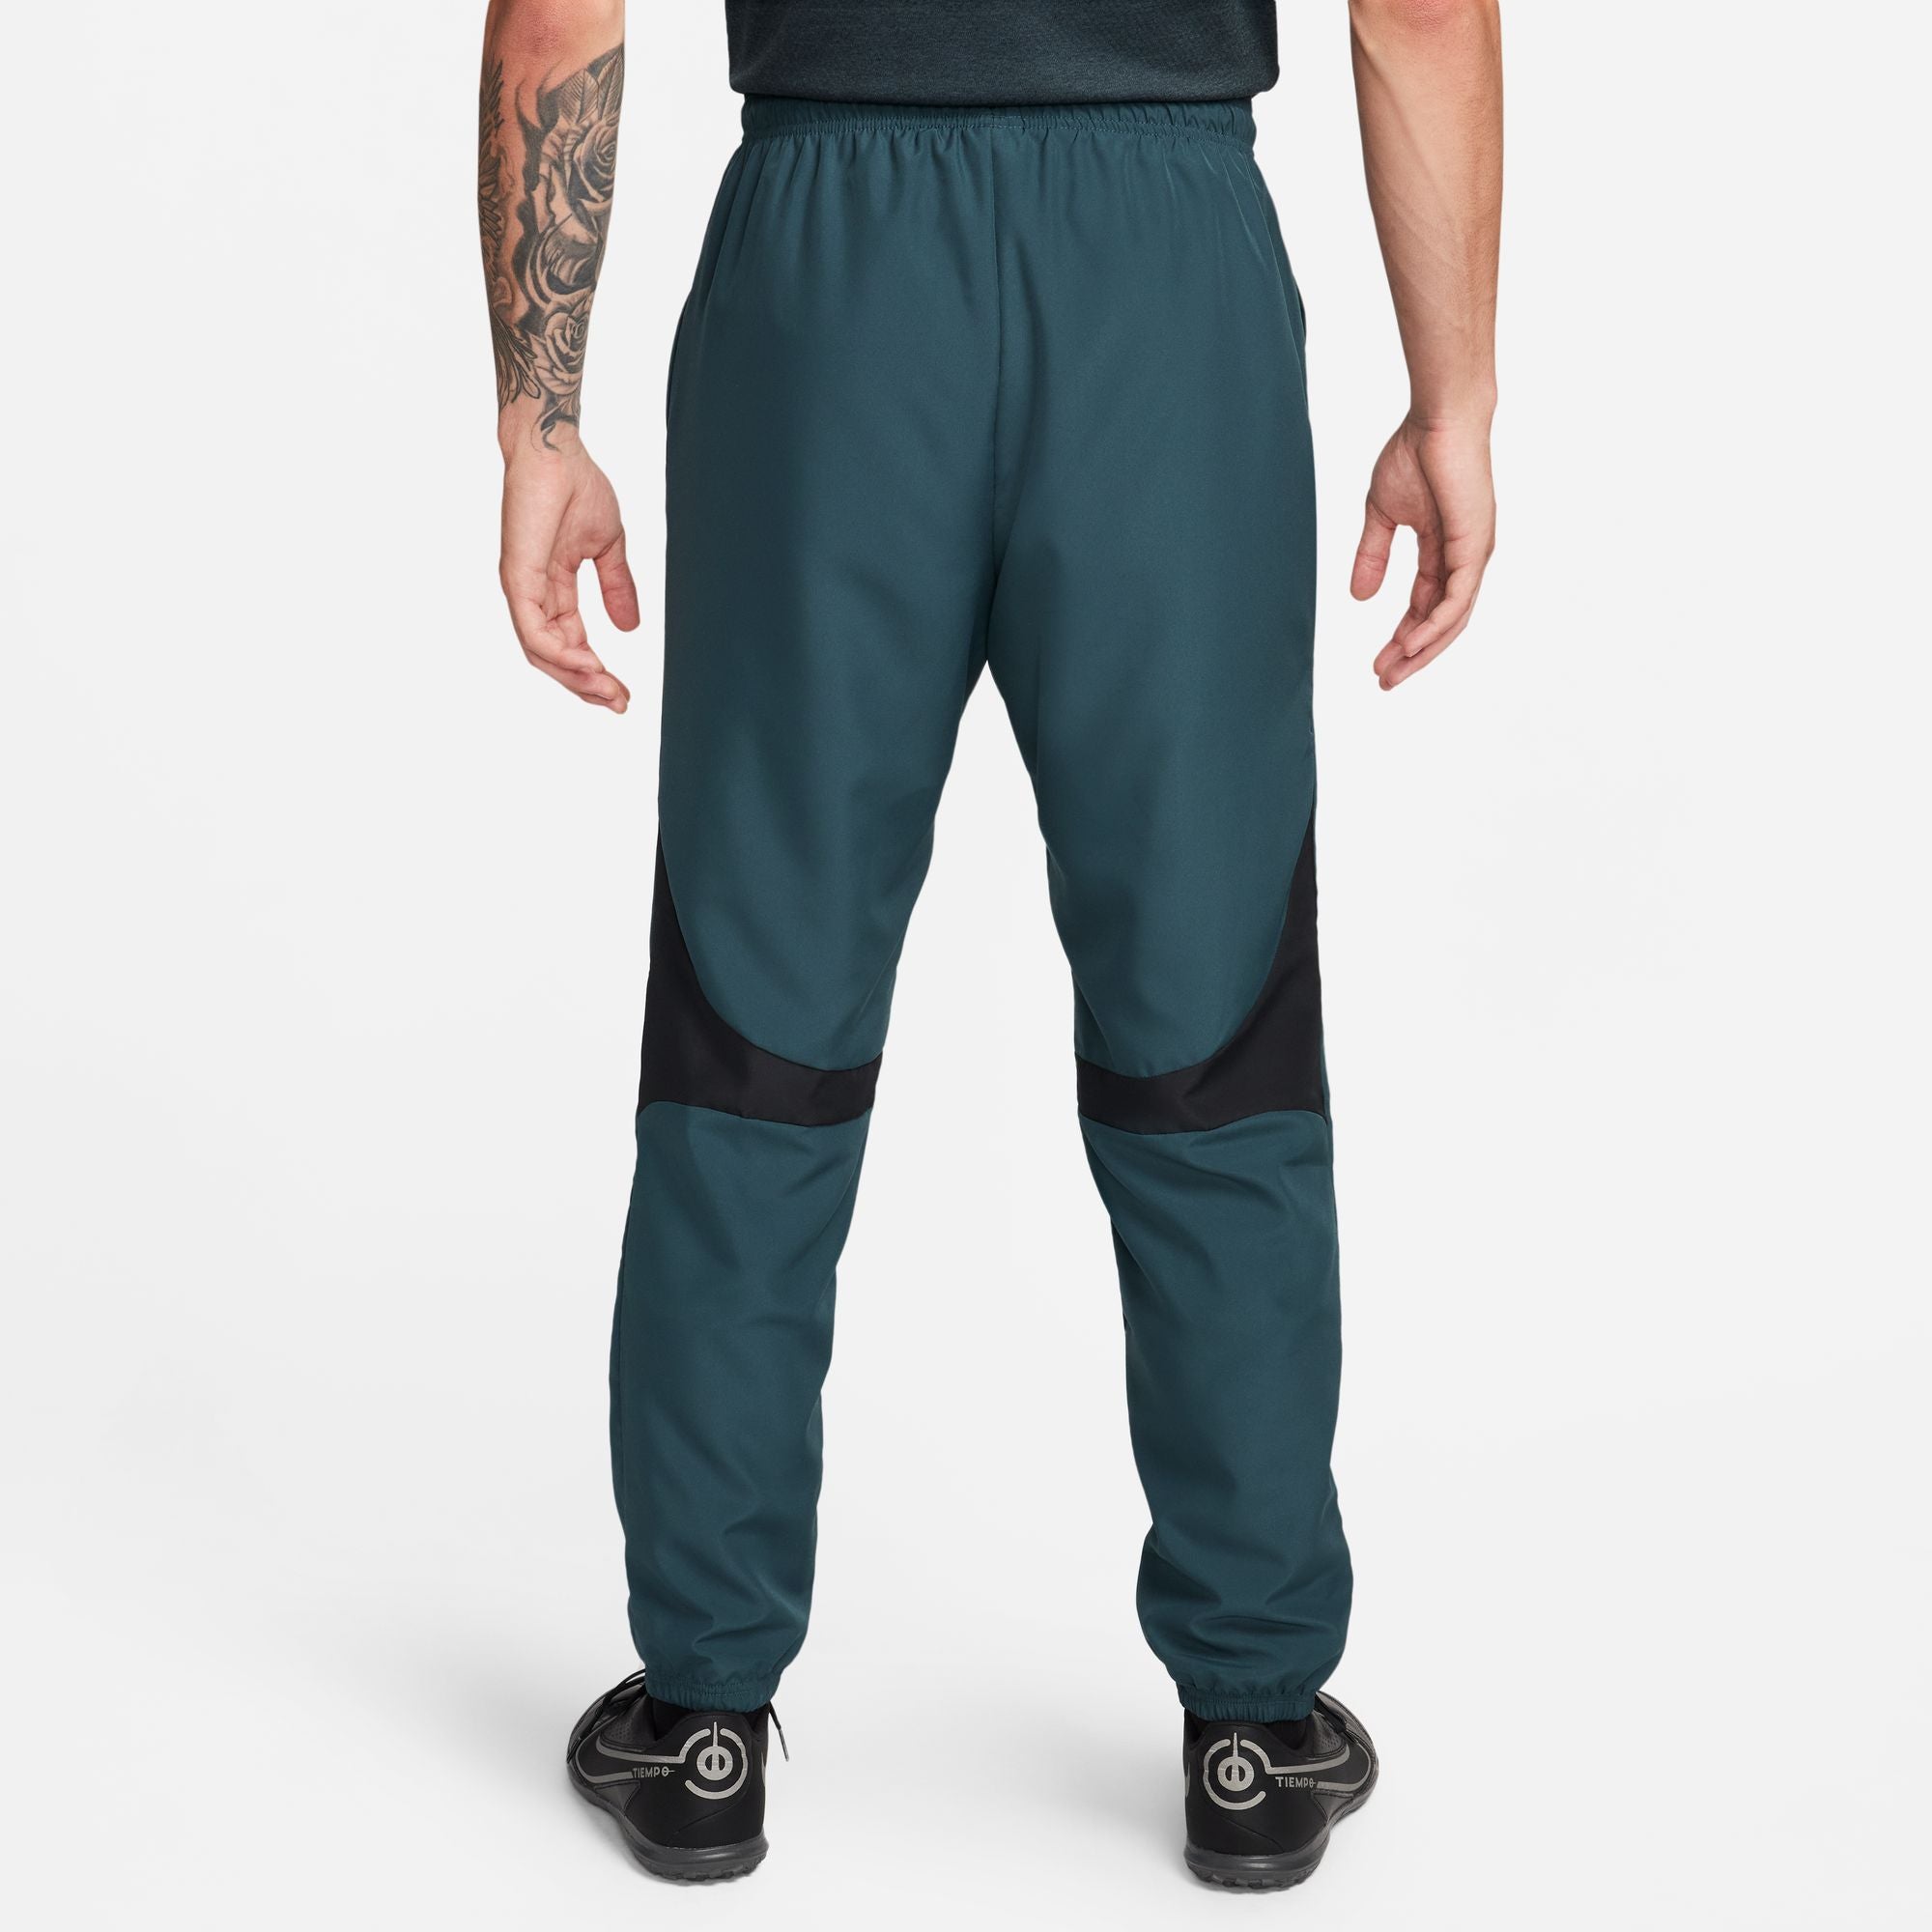 Pantalon Nike Academy Dri-Fit - Vert